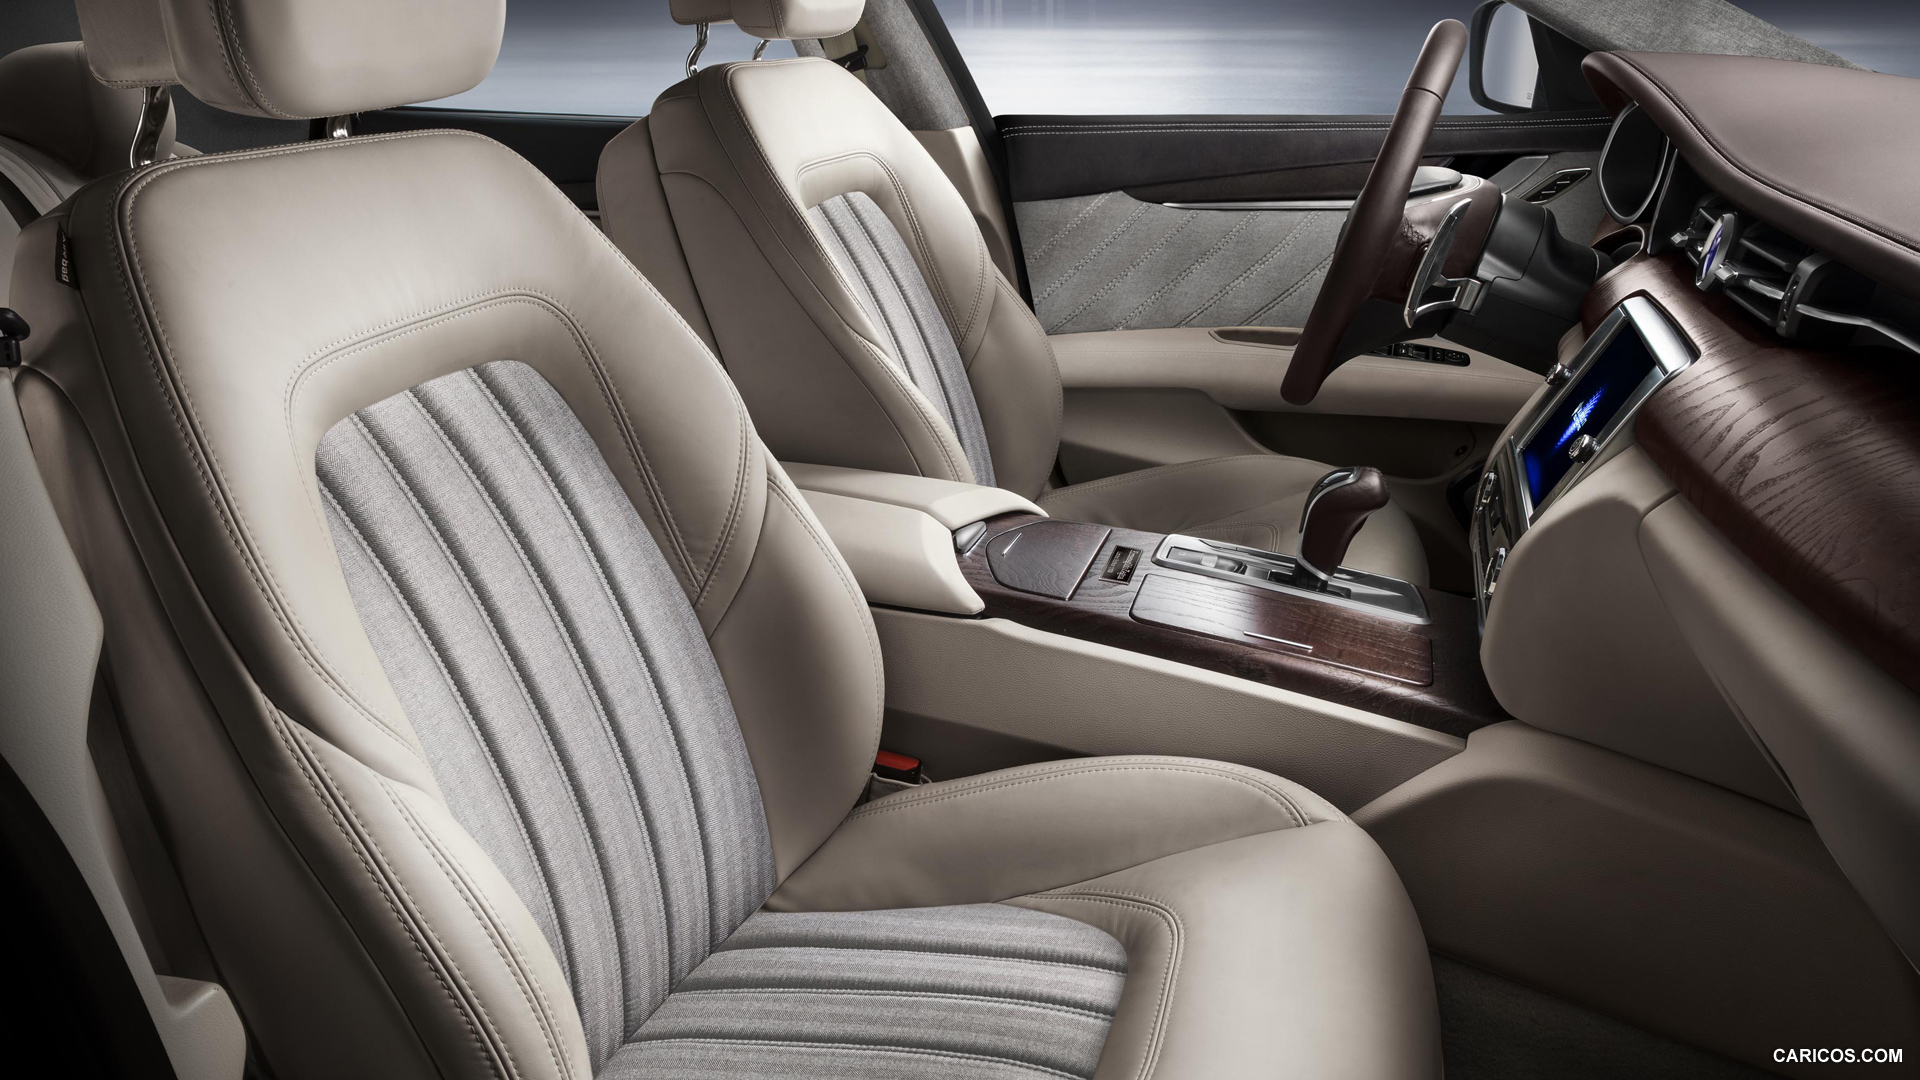 Maserati Quattroporte Ermenegildo Zegna Limited Edition (2013)  - Interior, #3 of 4